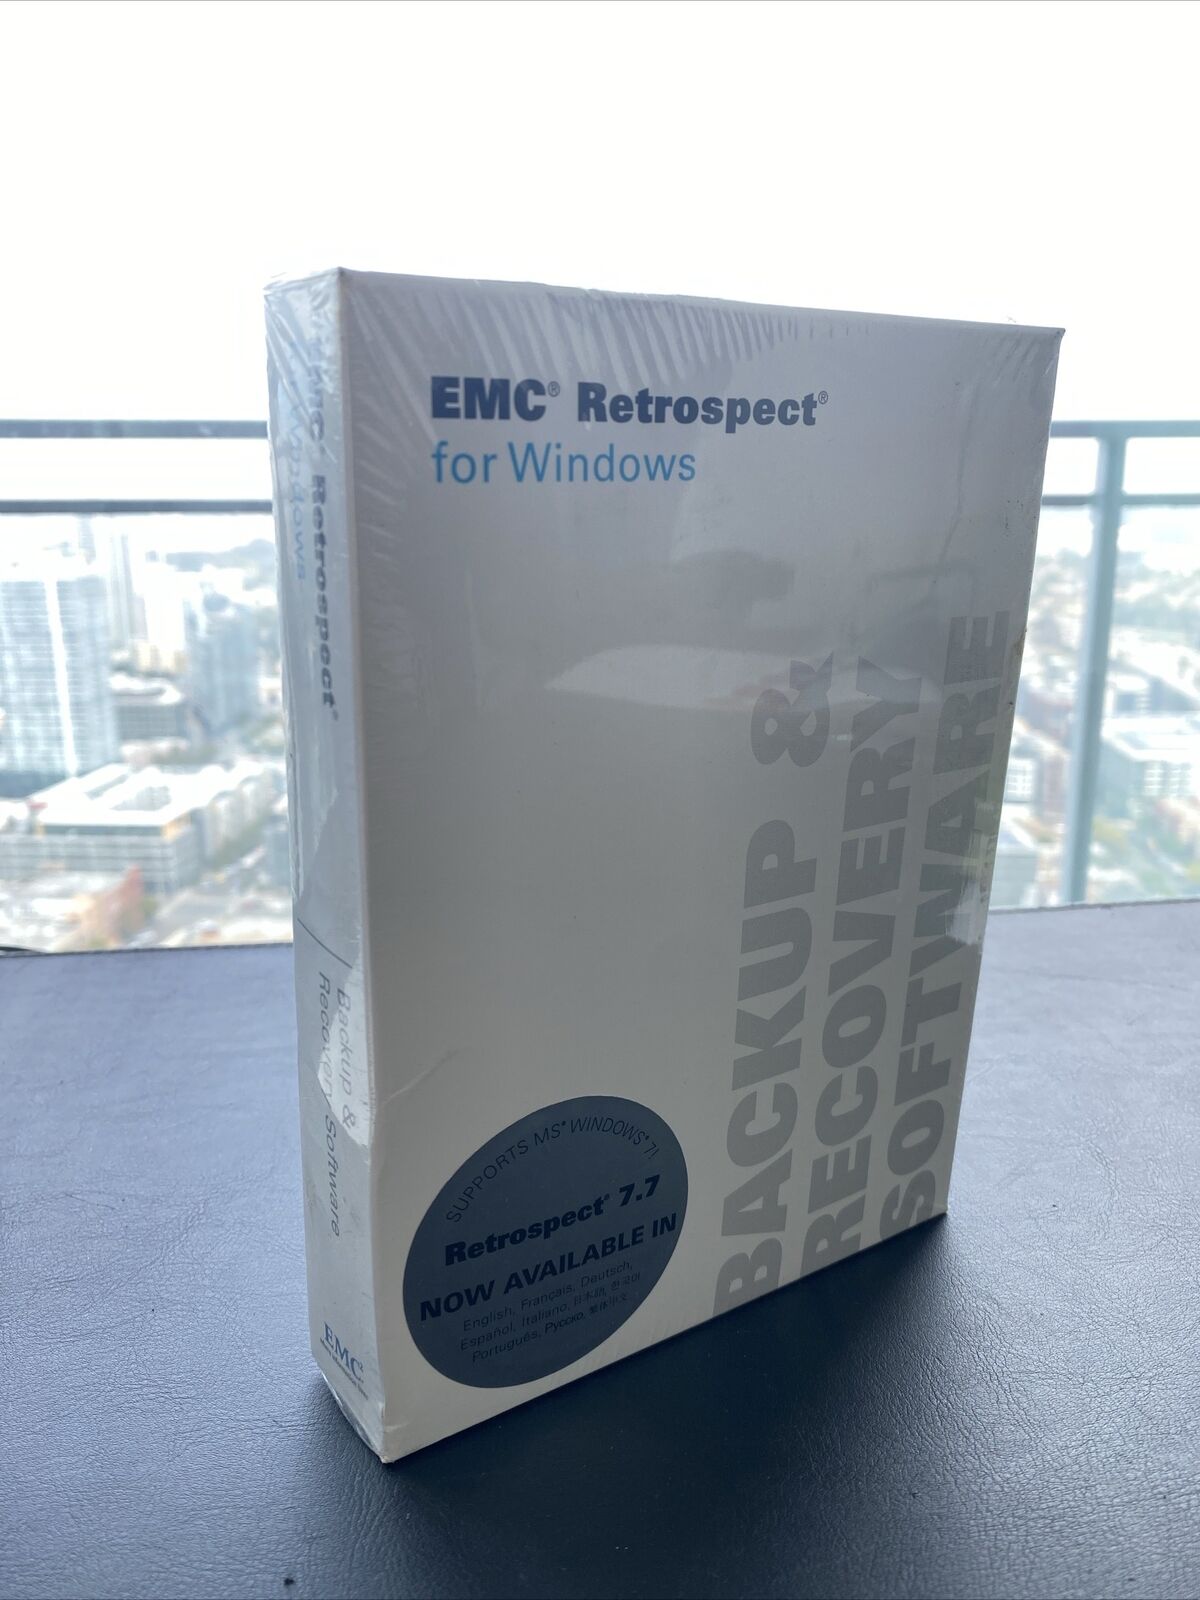 EMC RETROSPECT 7.7 SMALL BUSINESS SERVER STANDARD Backup & Recovery For Windows